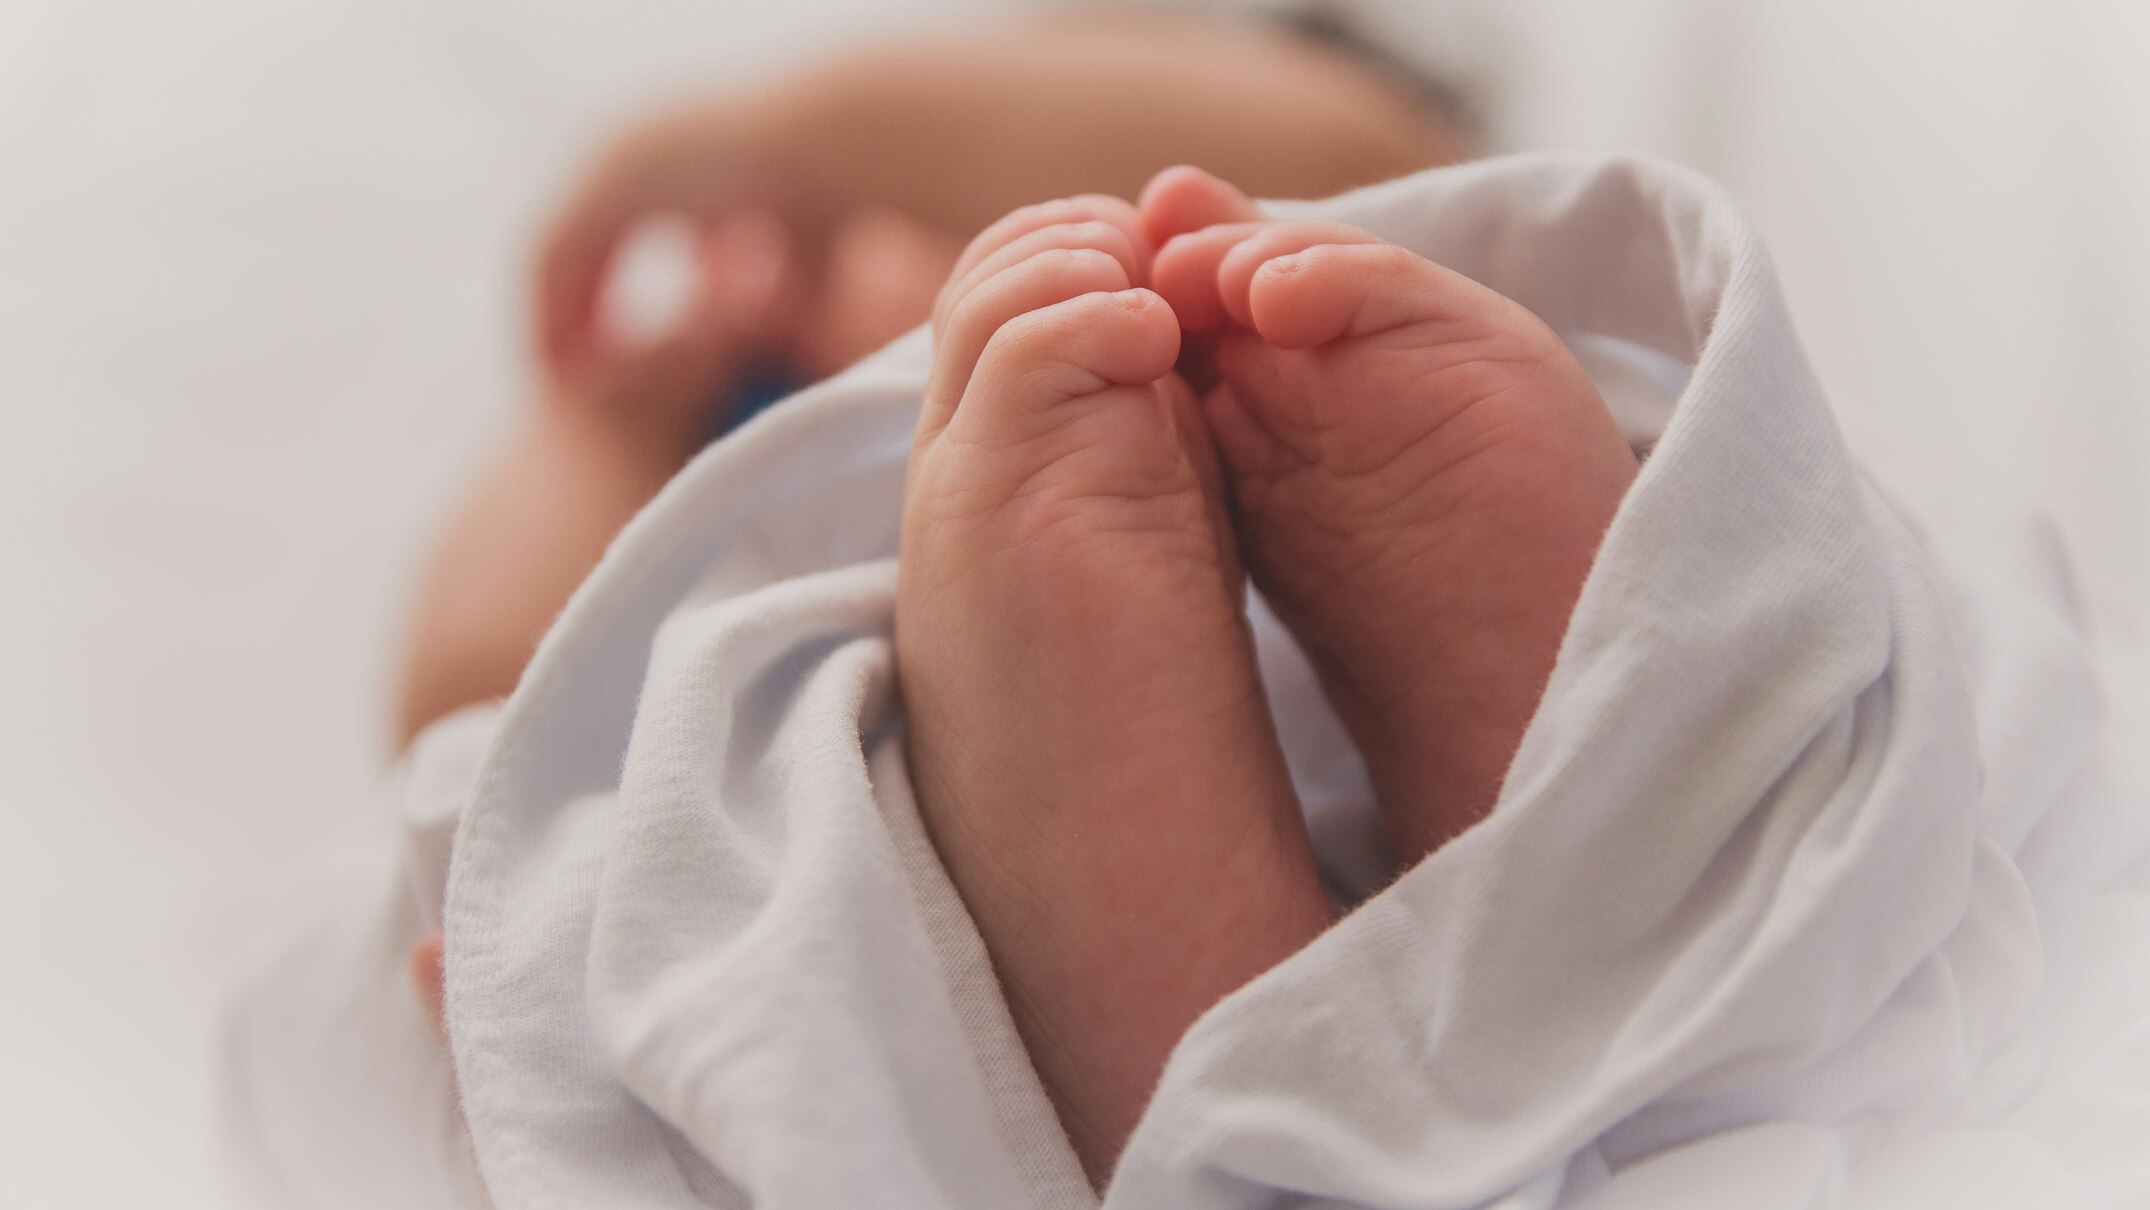 redland private maternity ward shuts down, adding pressure to already strained public hospitals amid 'maternity crisis'